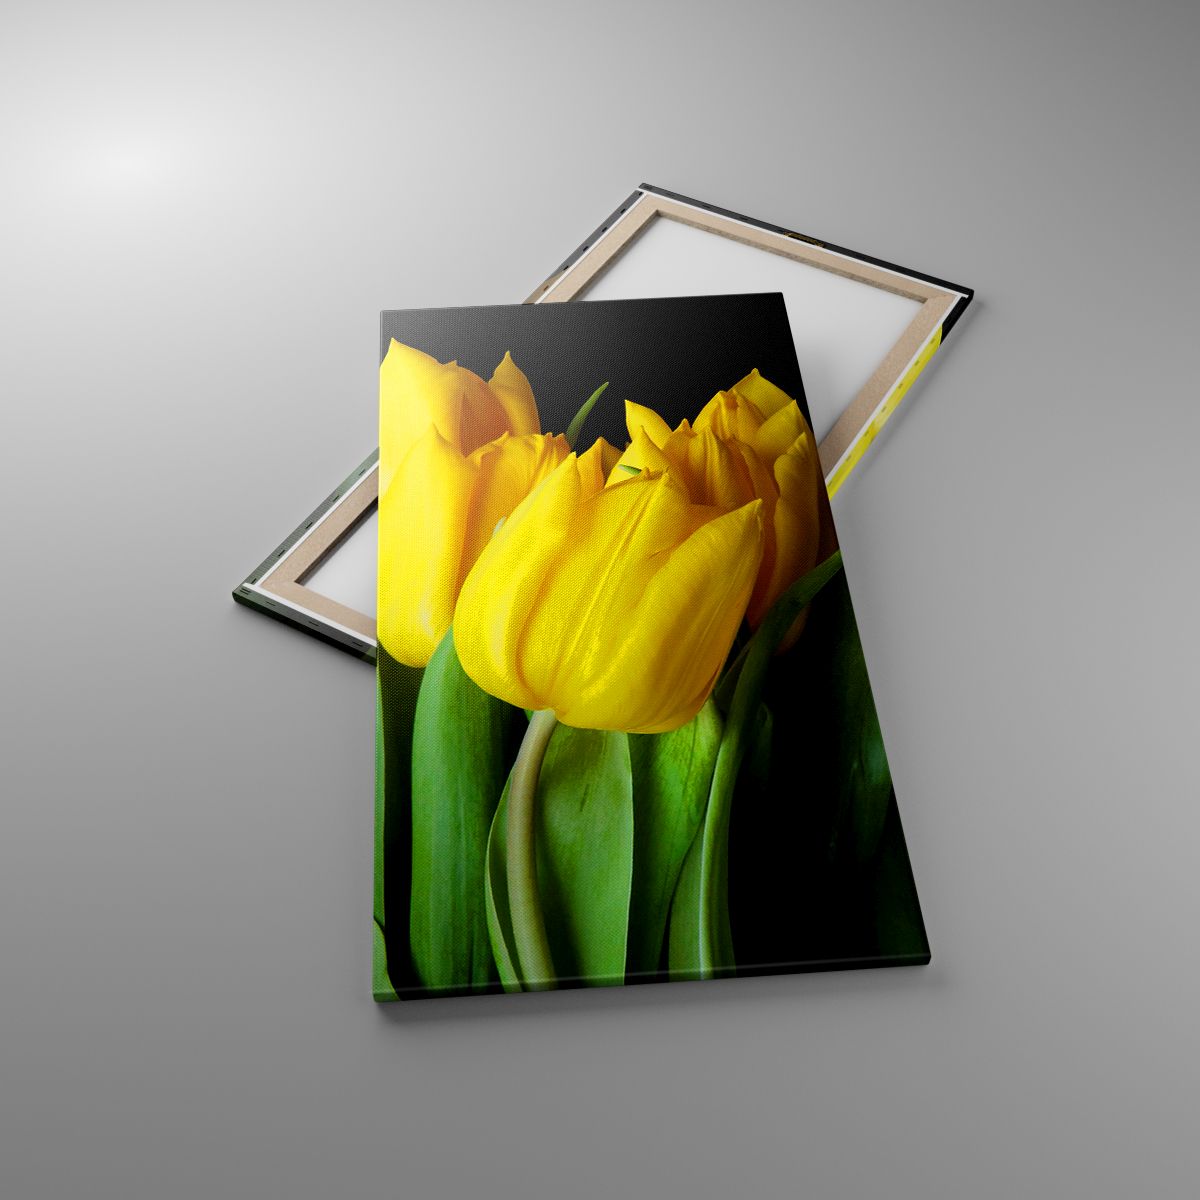 Impression Fleurs, Impression Tulipes, Impression Bouquet De Fleurs, Impression Tulipes Jaunes, Impression Fleuriste